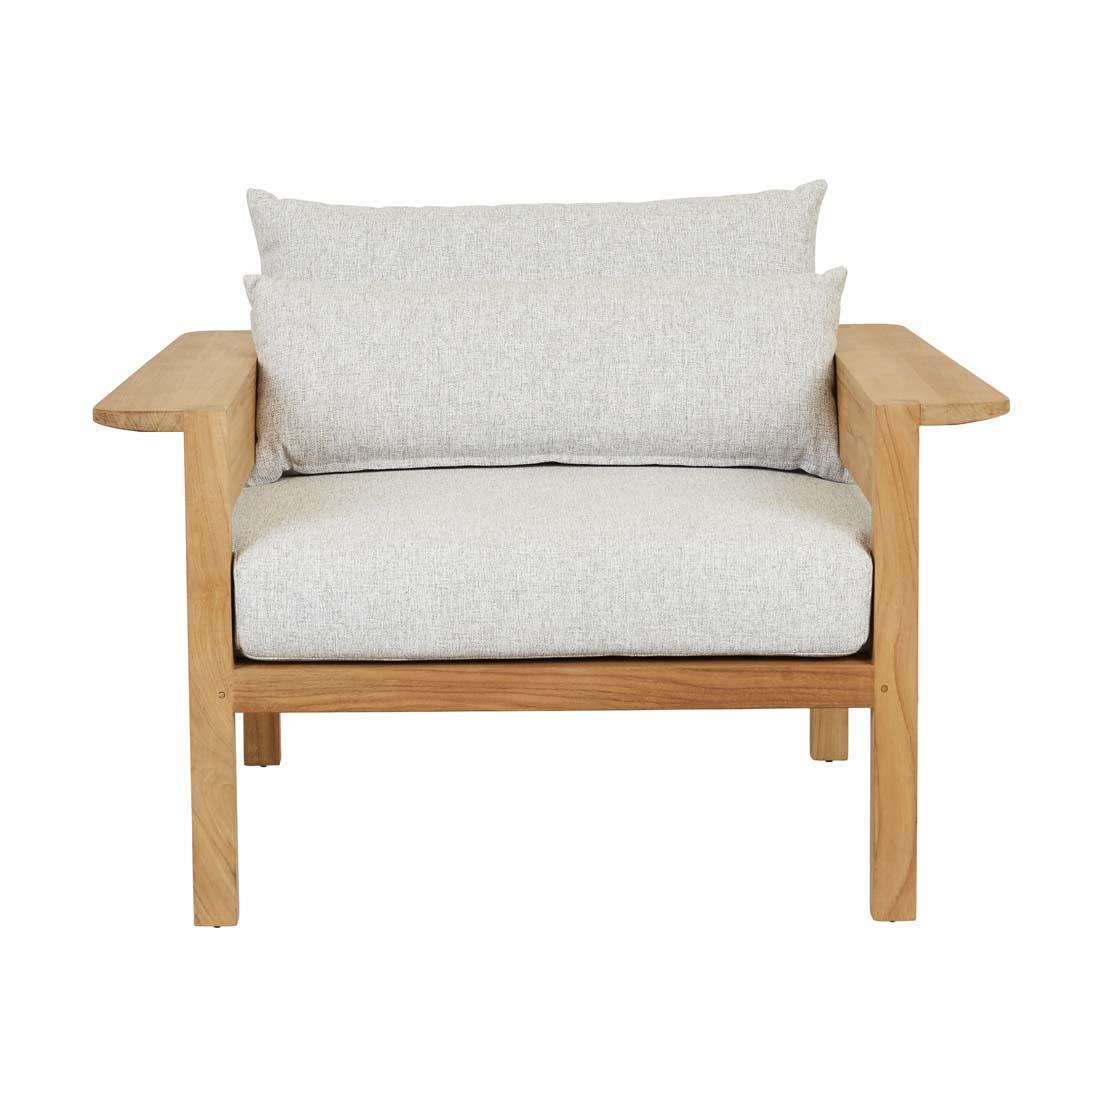 Layne Sofa Chair image 0